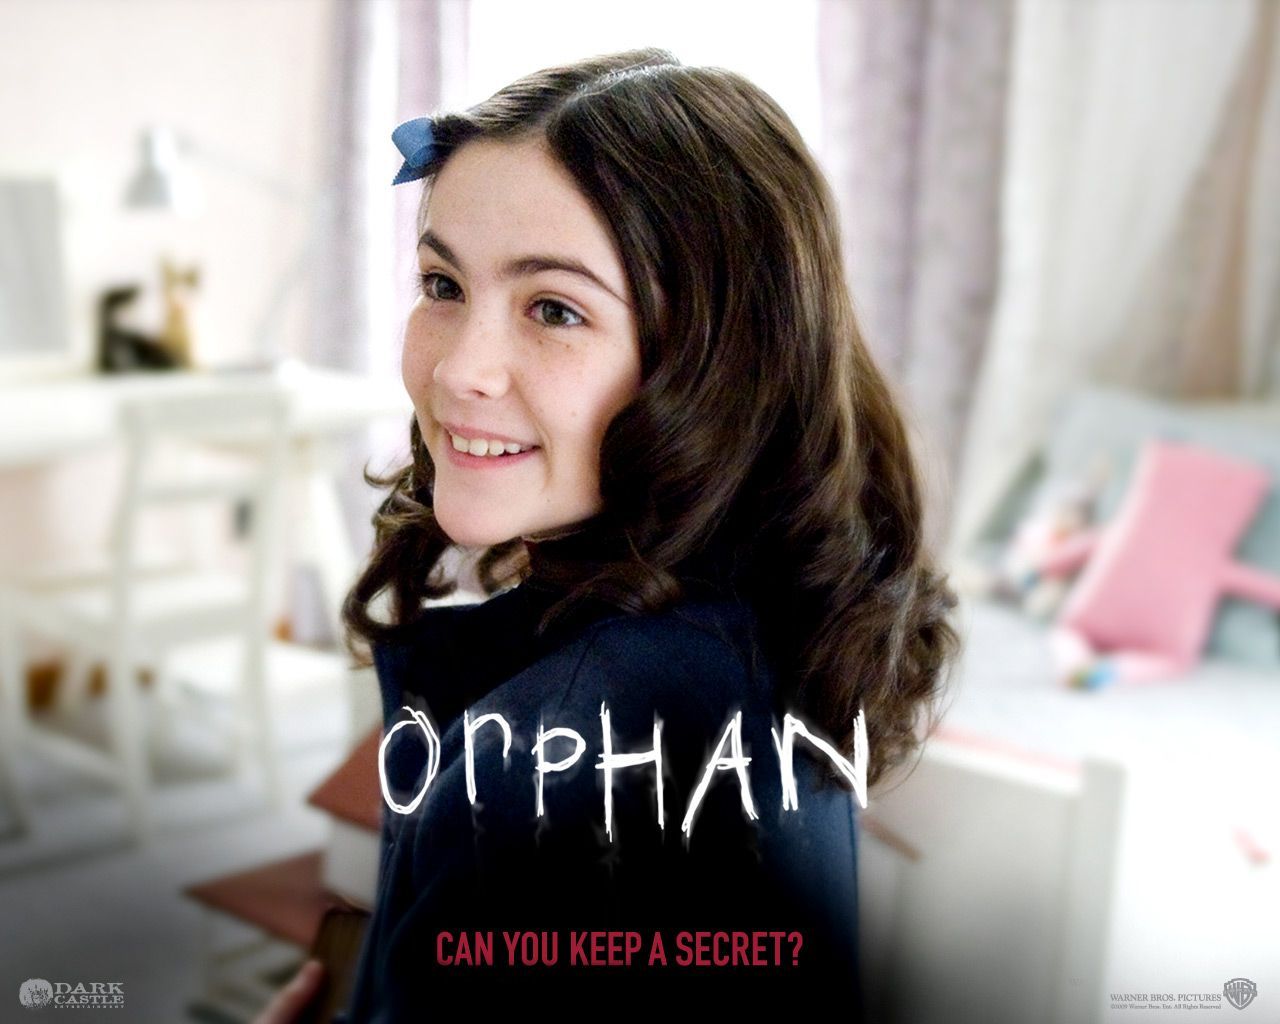 Orphan't let her cuteness fool you! Starring Vera Farmiga